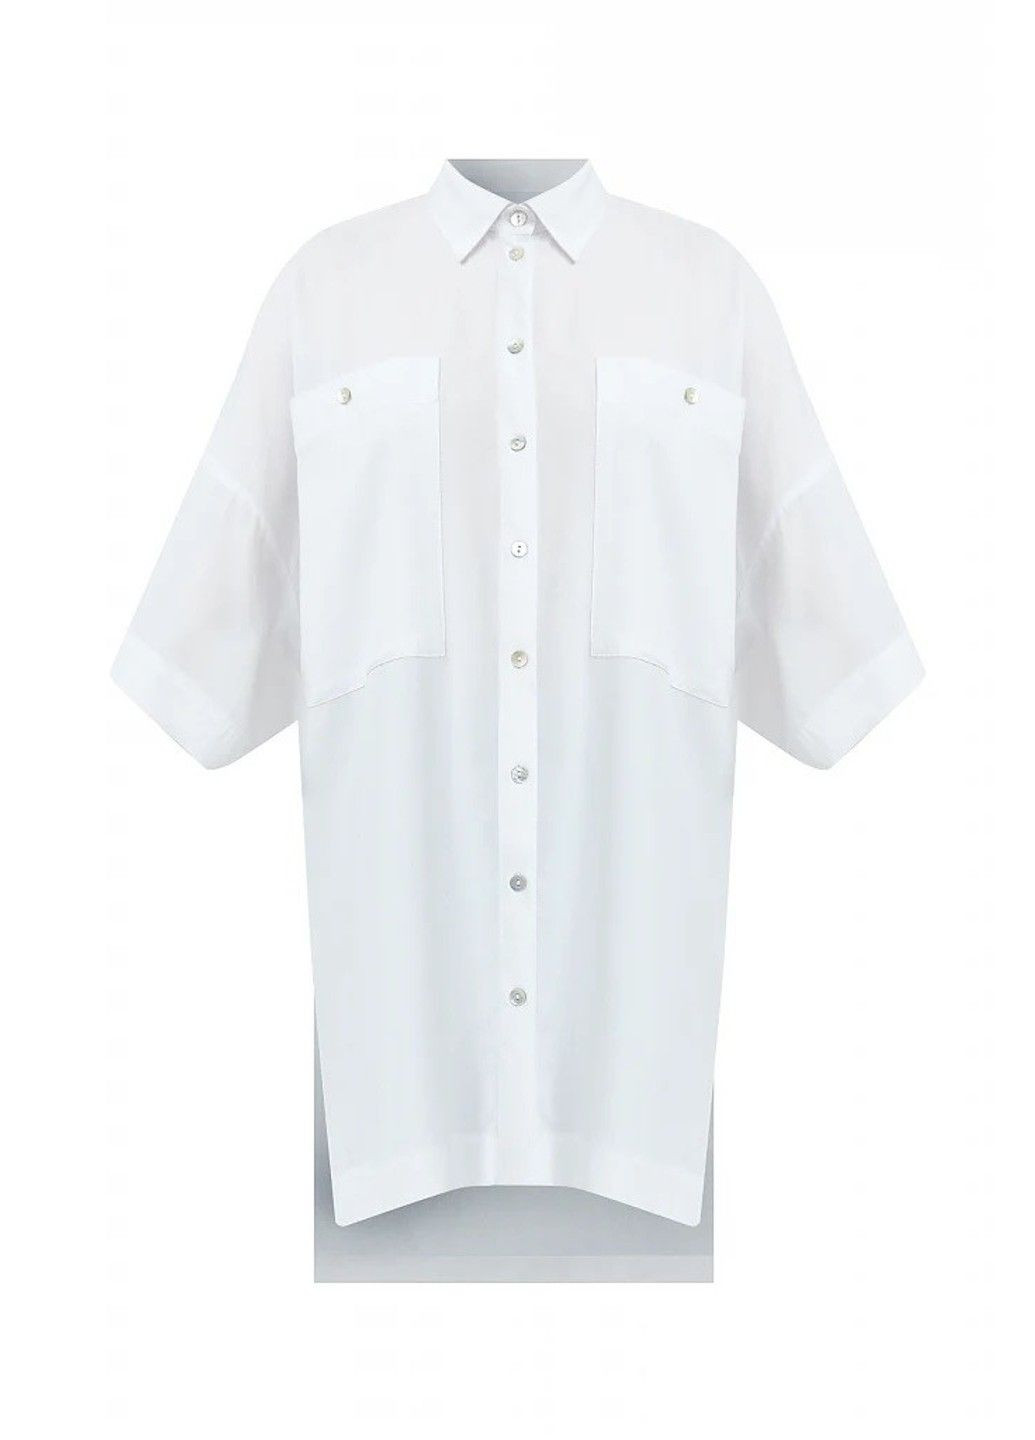 Белая летняя рубашка s21-11076-201 Finn Flare